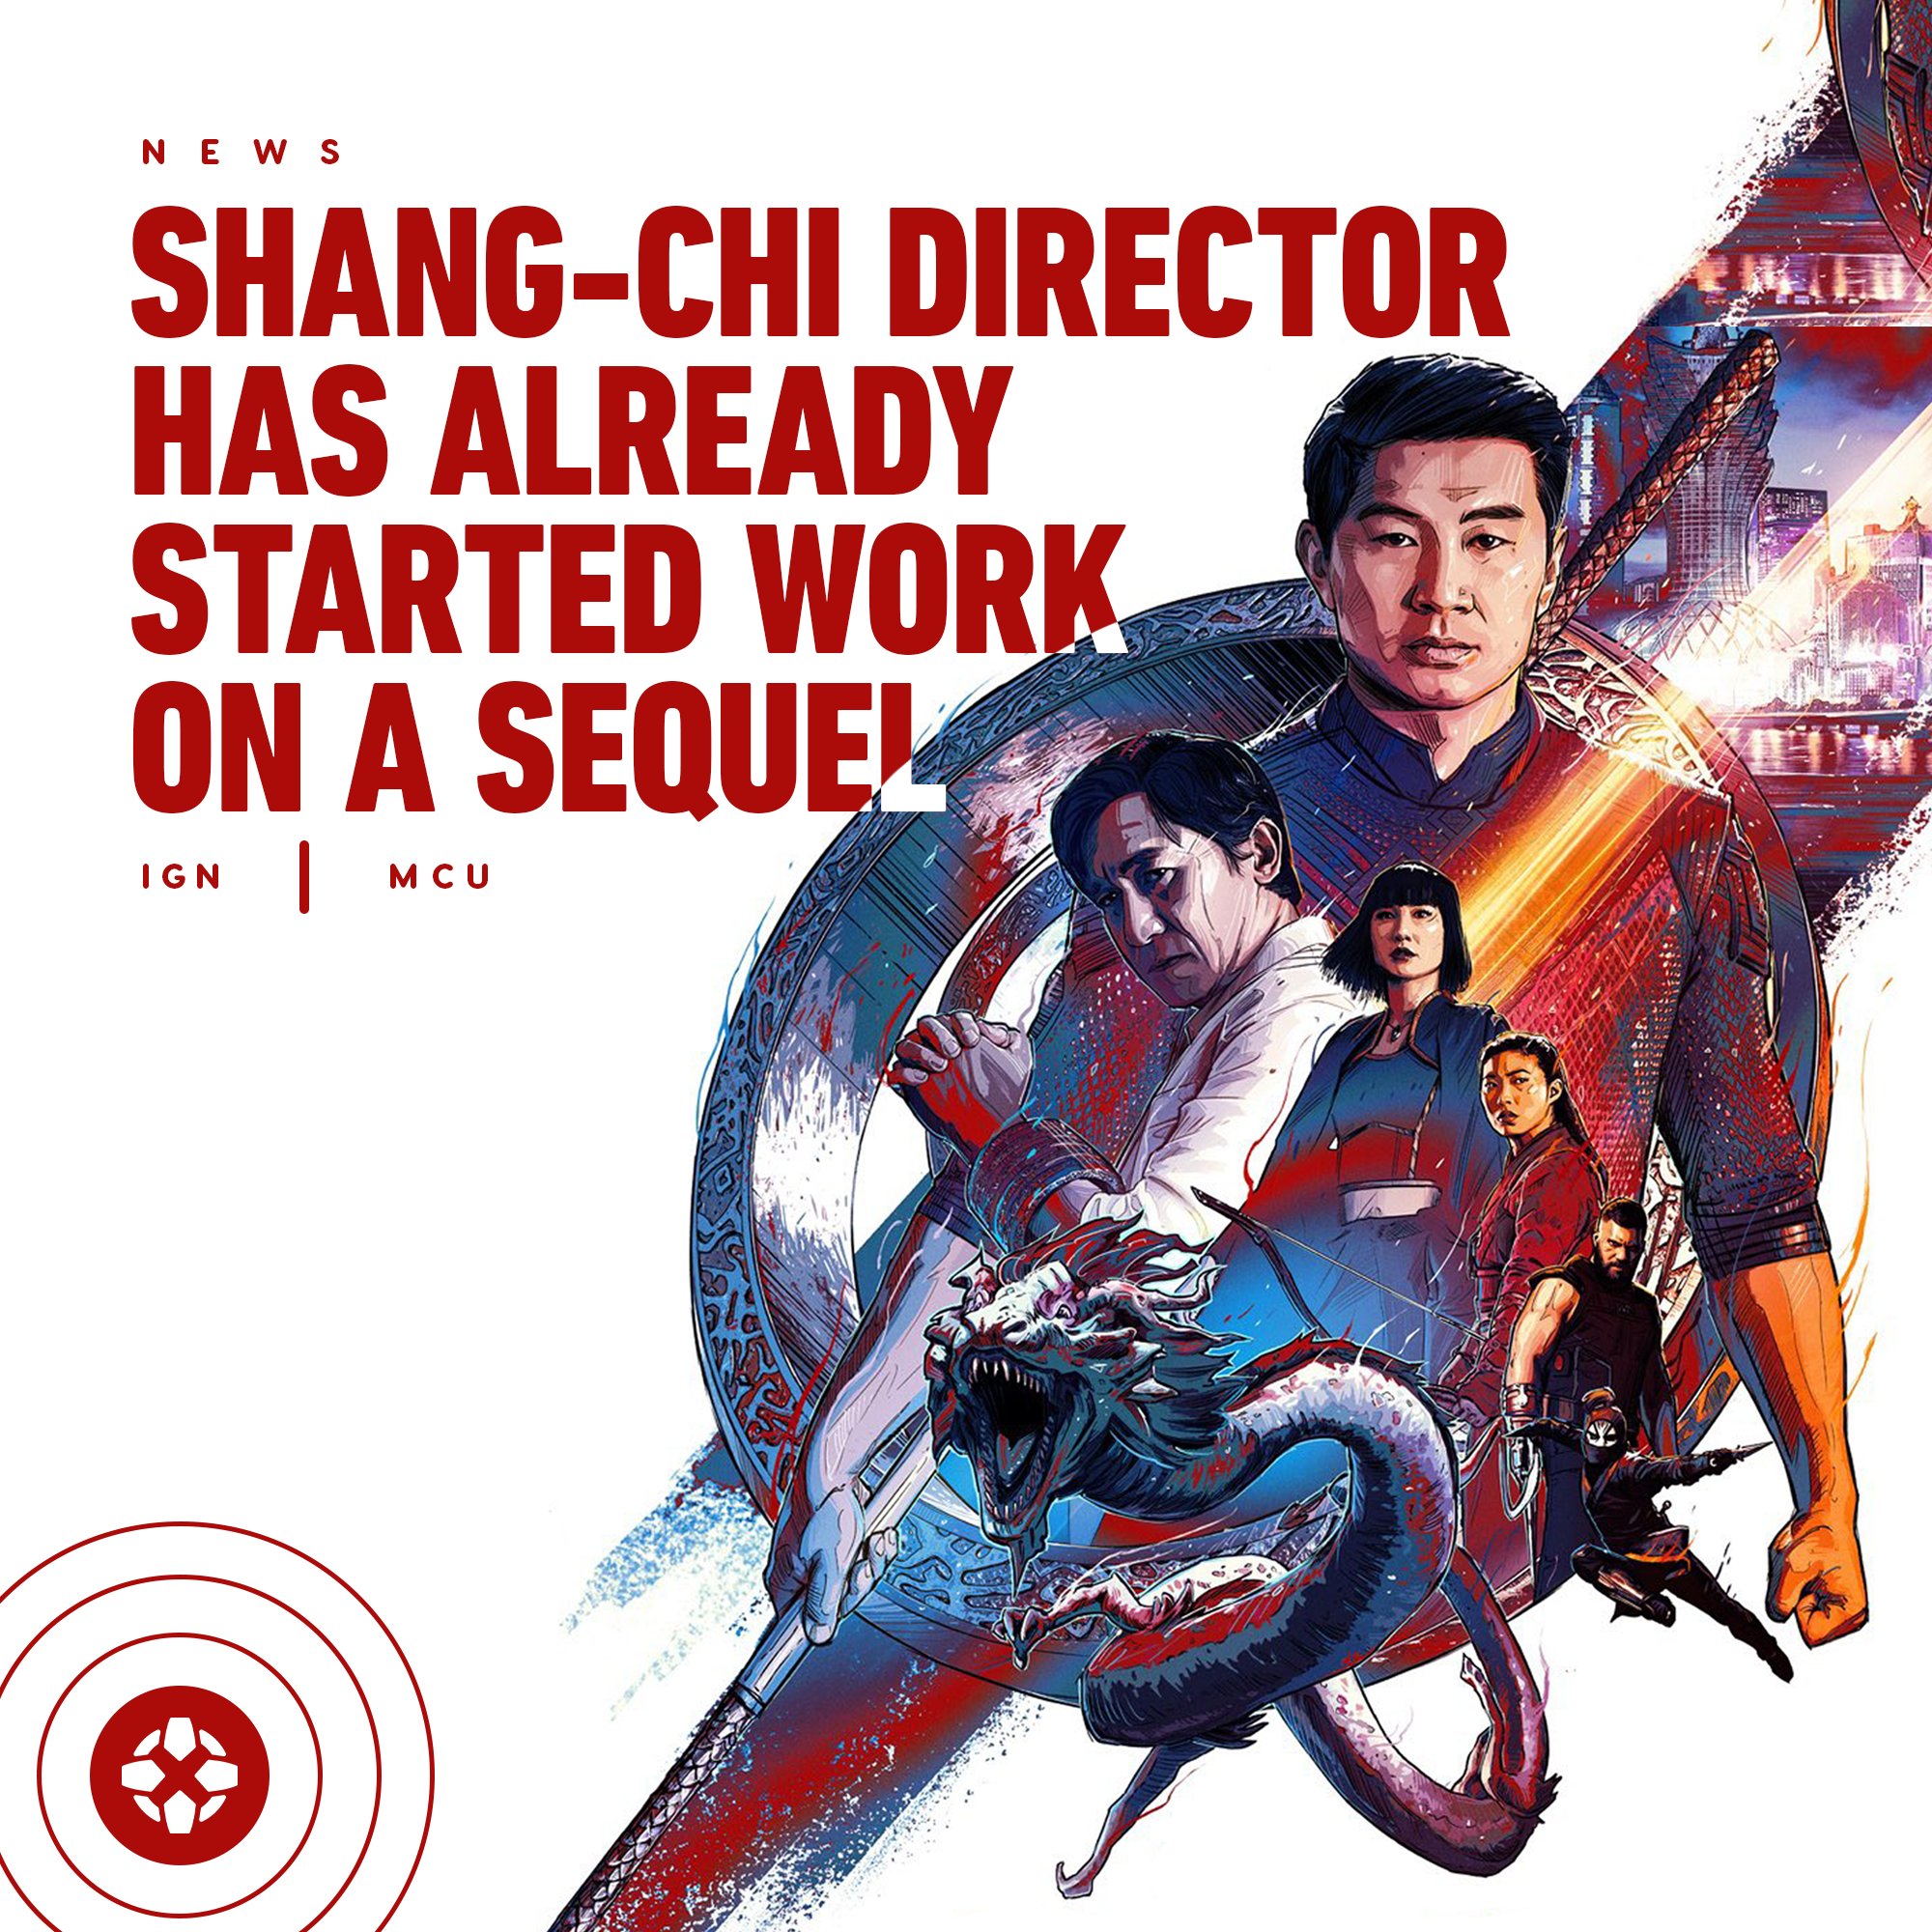 IGN - Shang-Chi director Destin Daniel Cretton is